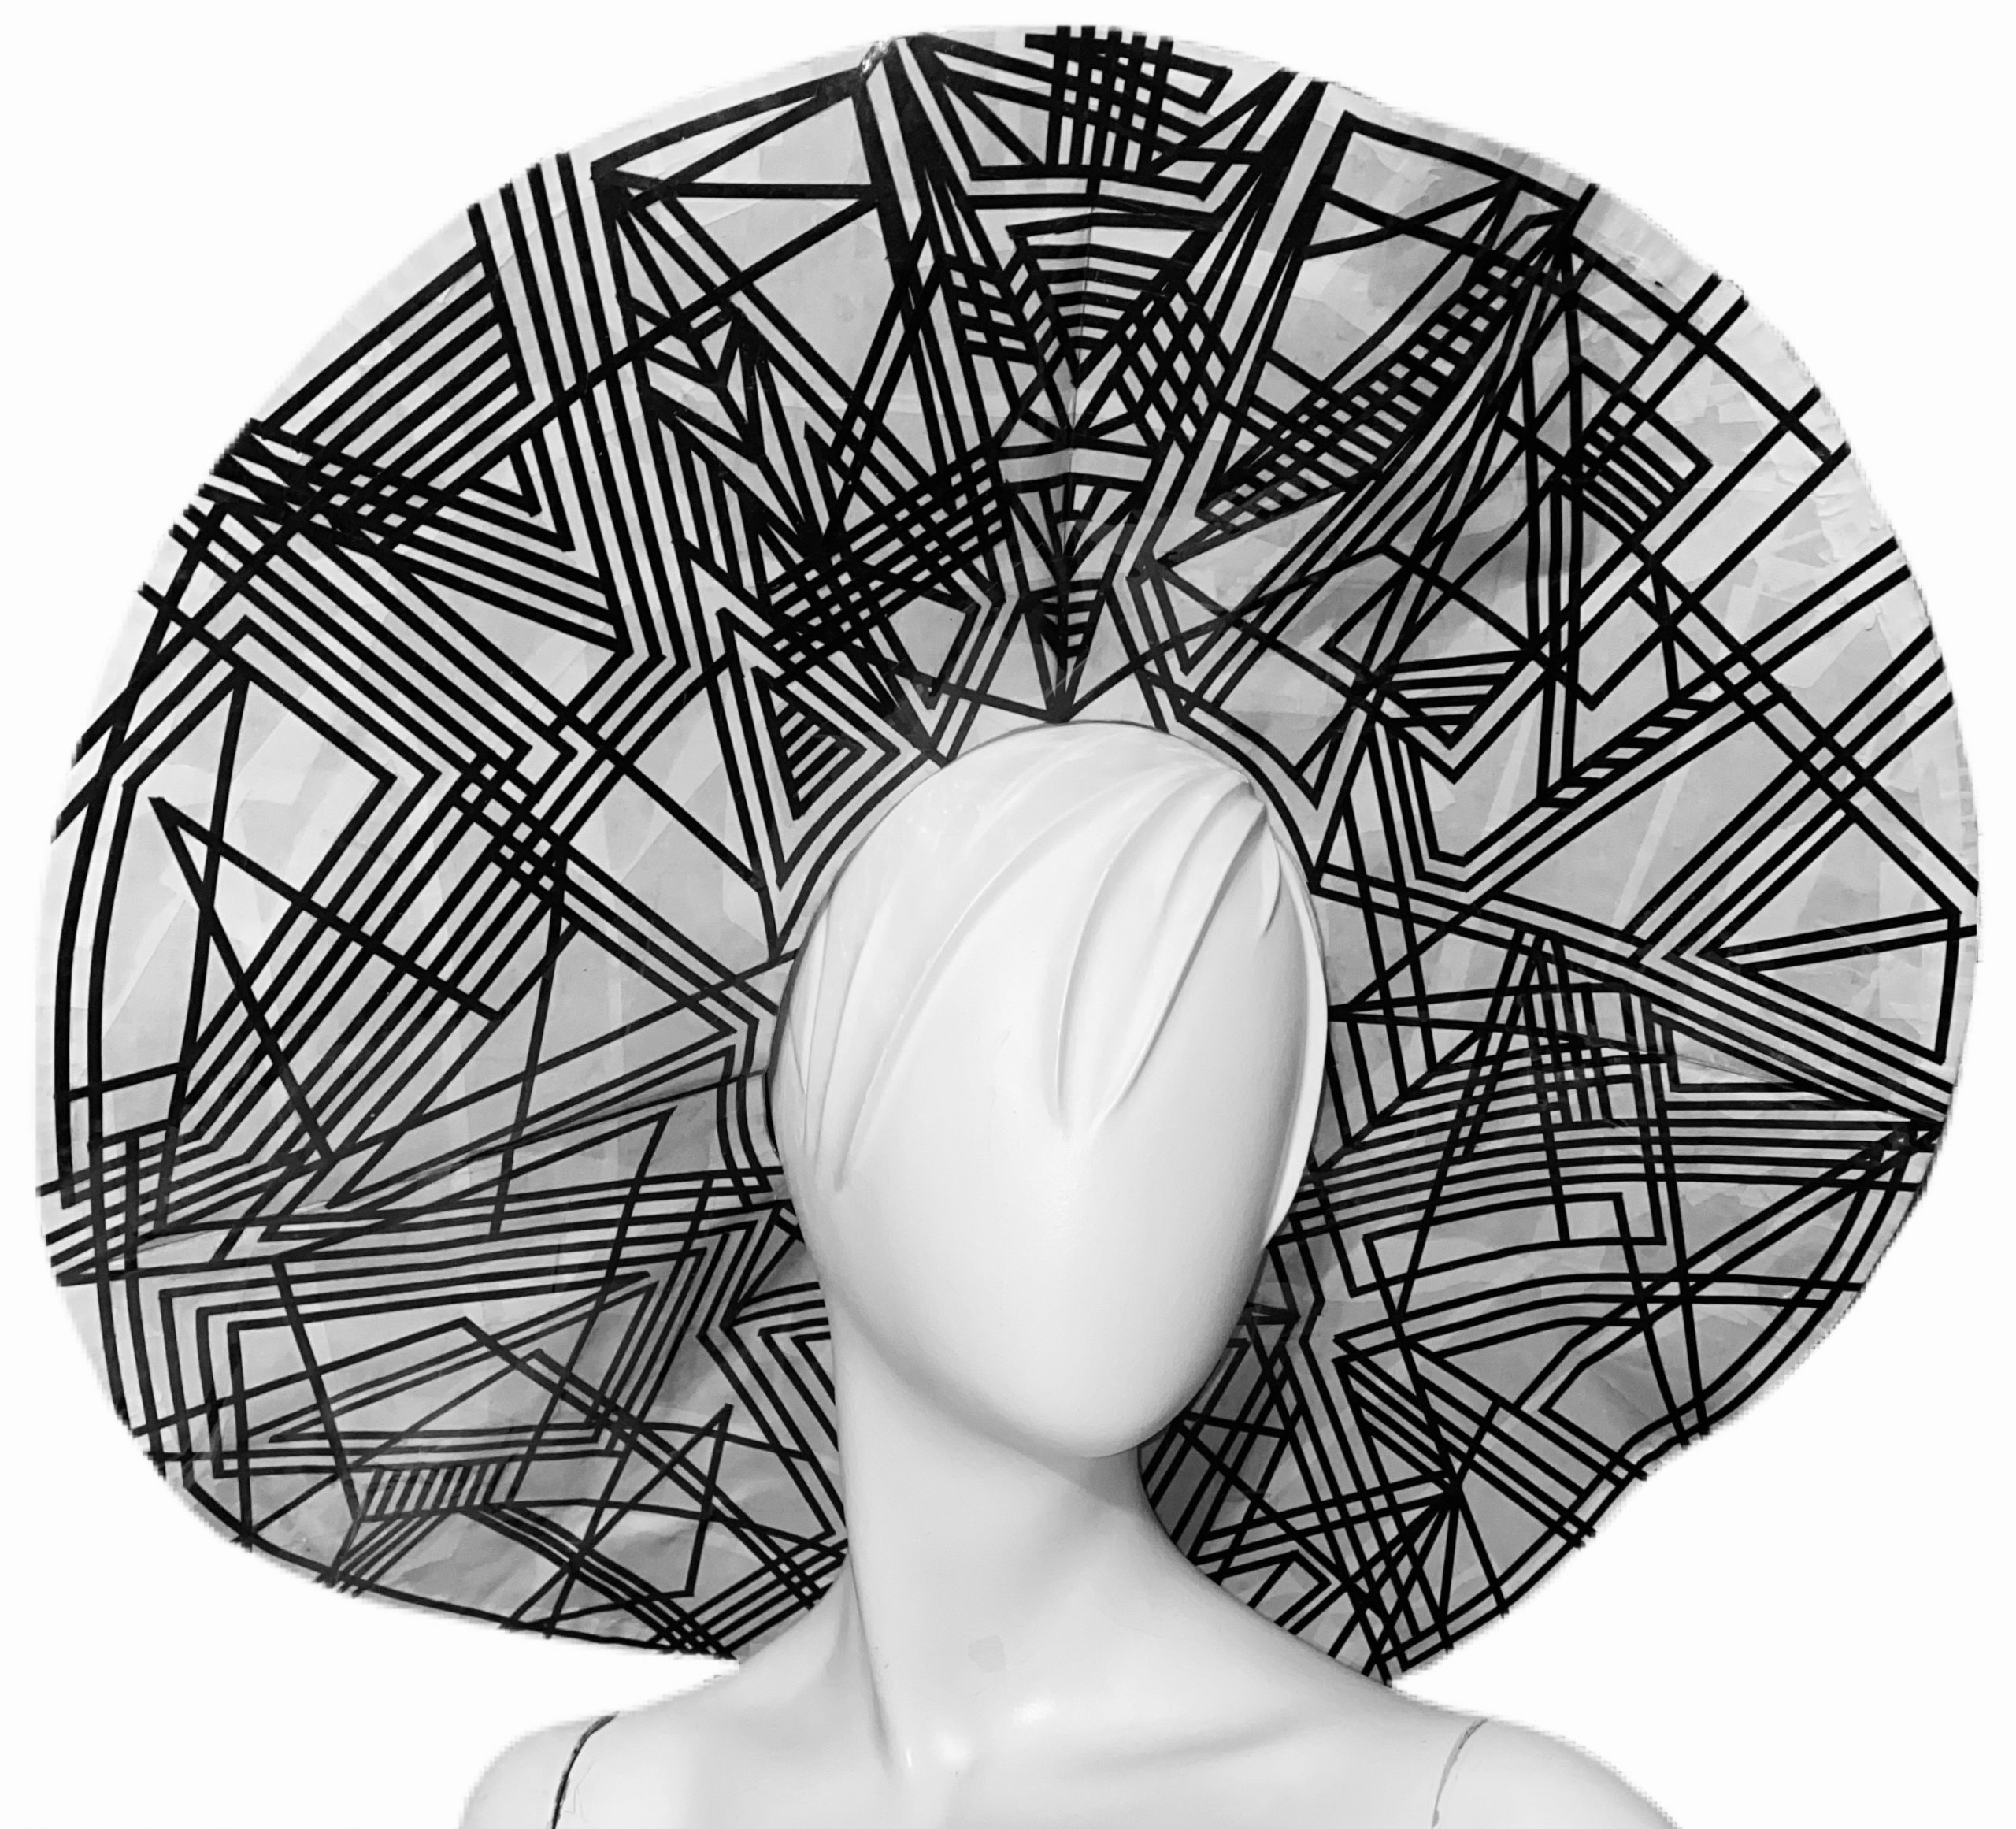 amanda germolec - ‘inside LINES hat’ (in process)